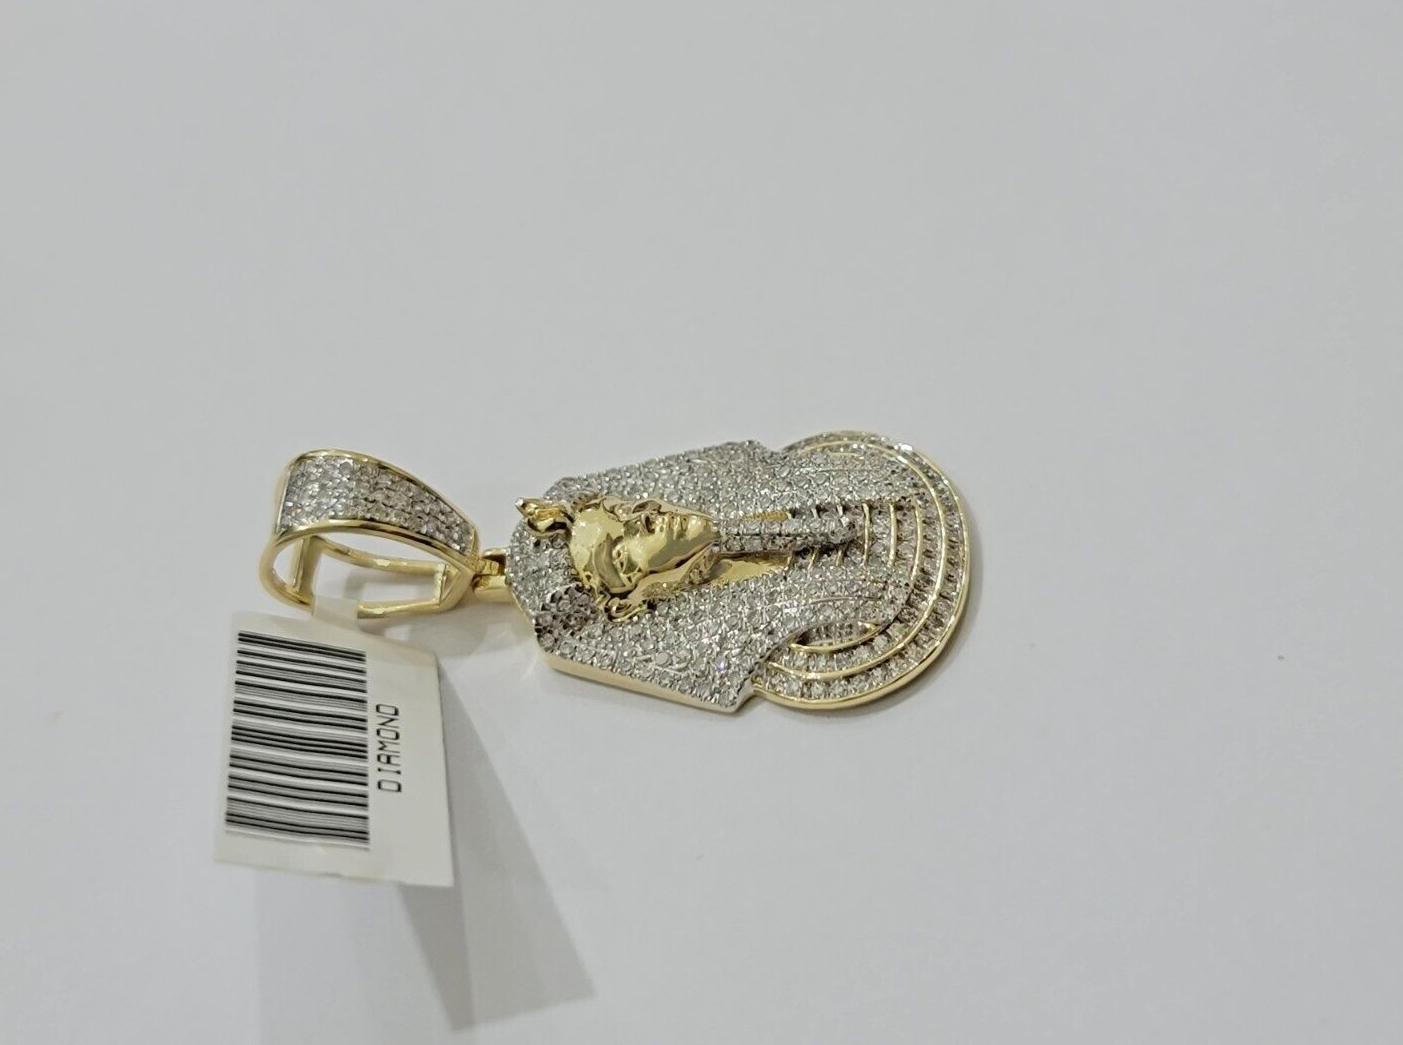 Real Diamond Pharoah Charm Pendant 10k Yellow Gold 0.85 CT Natura Chain Necklace